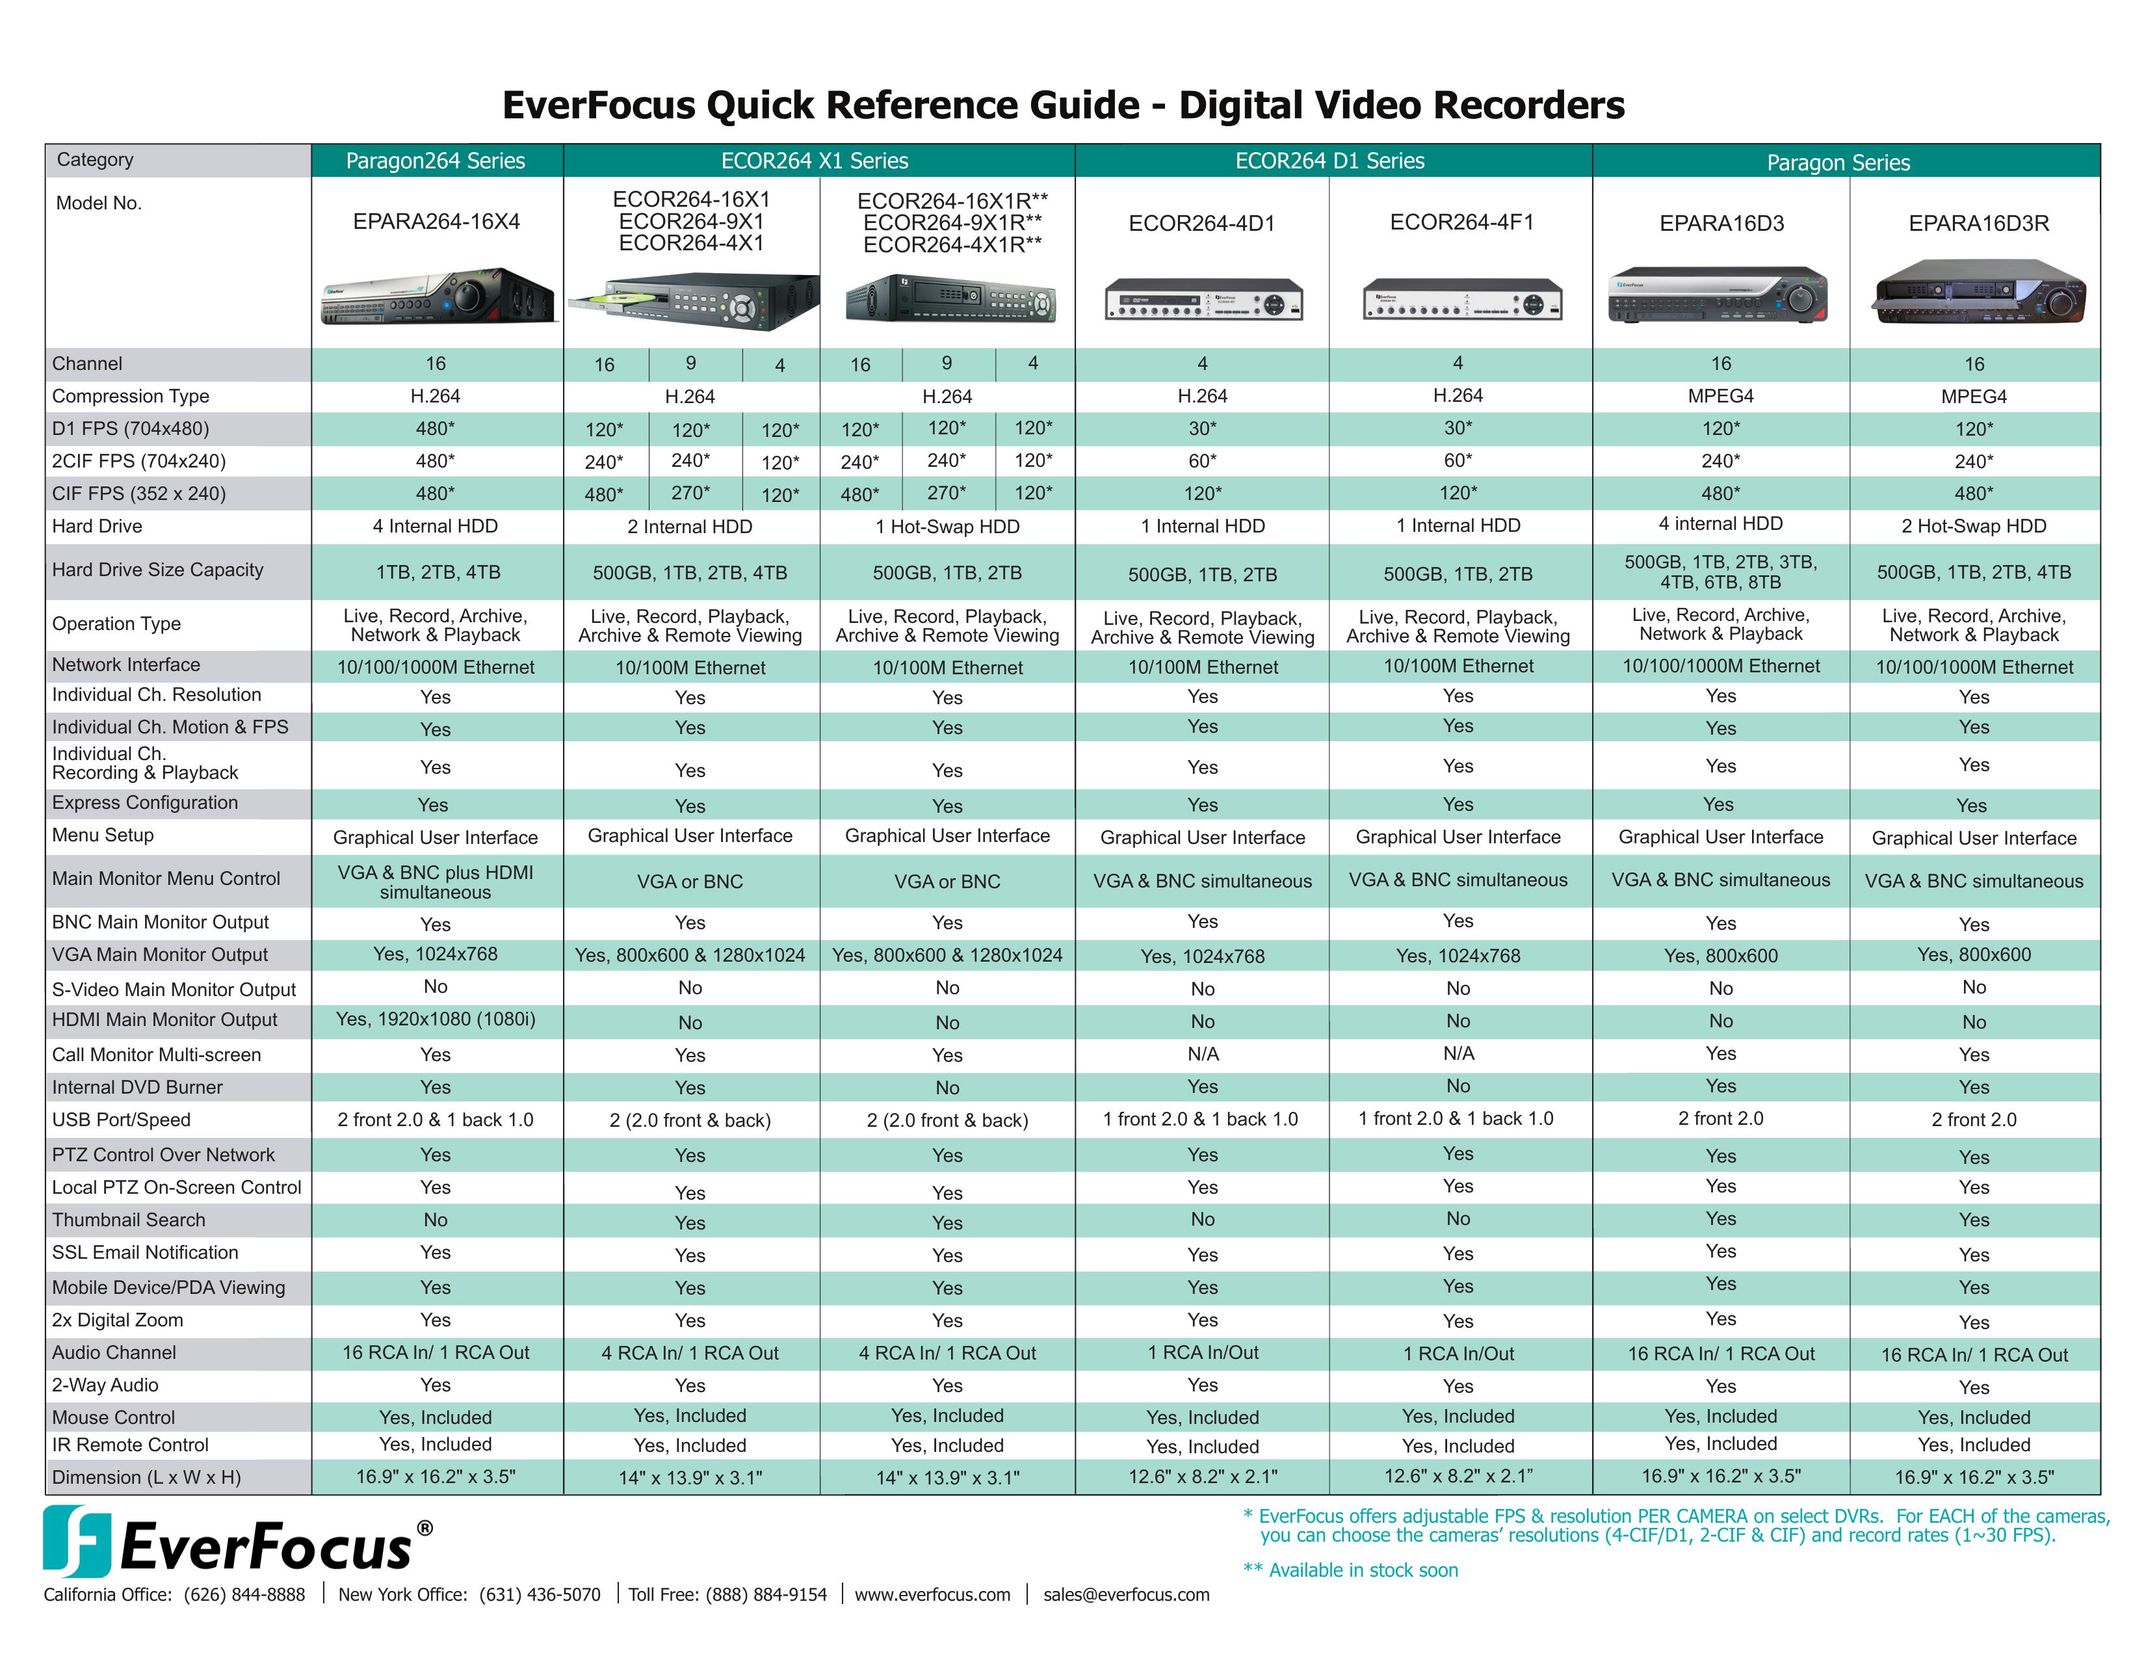 EverFocus ECOR264-4D1 DVR User Manual